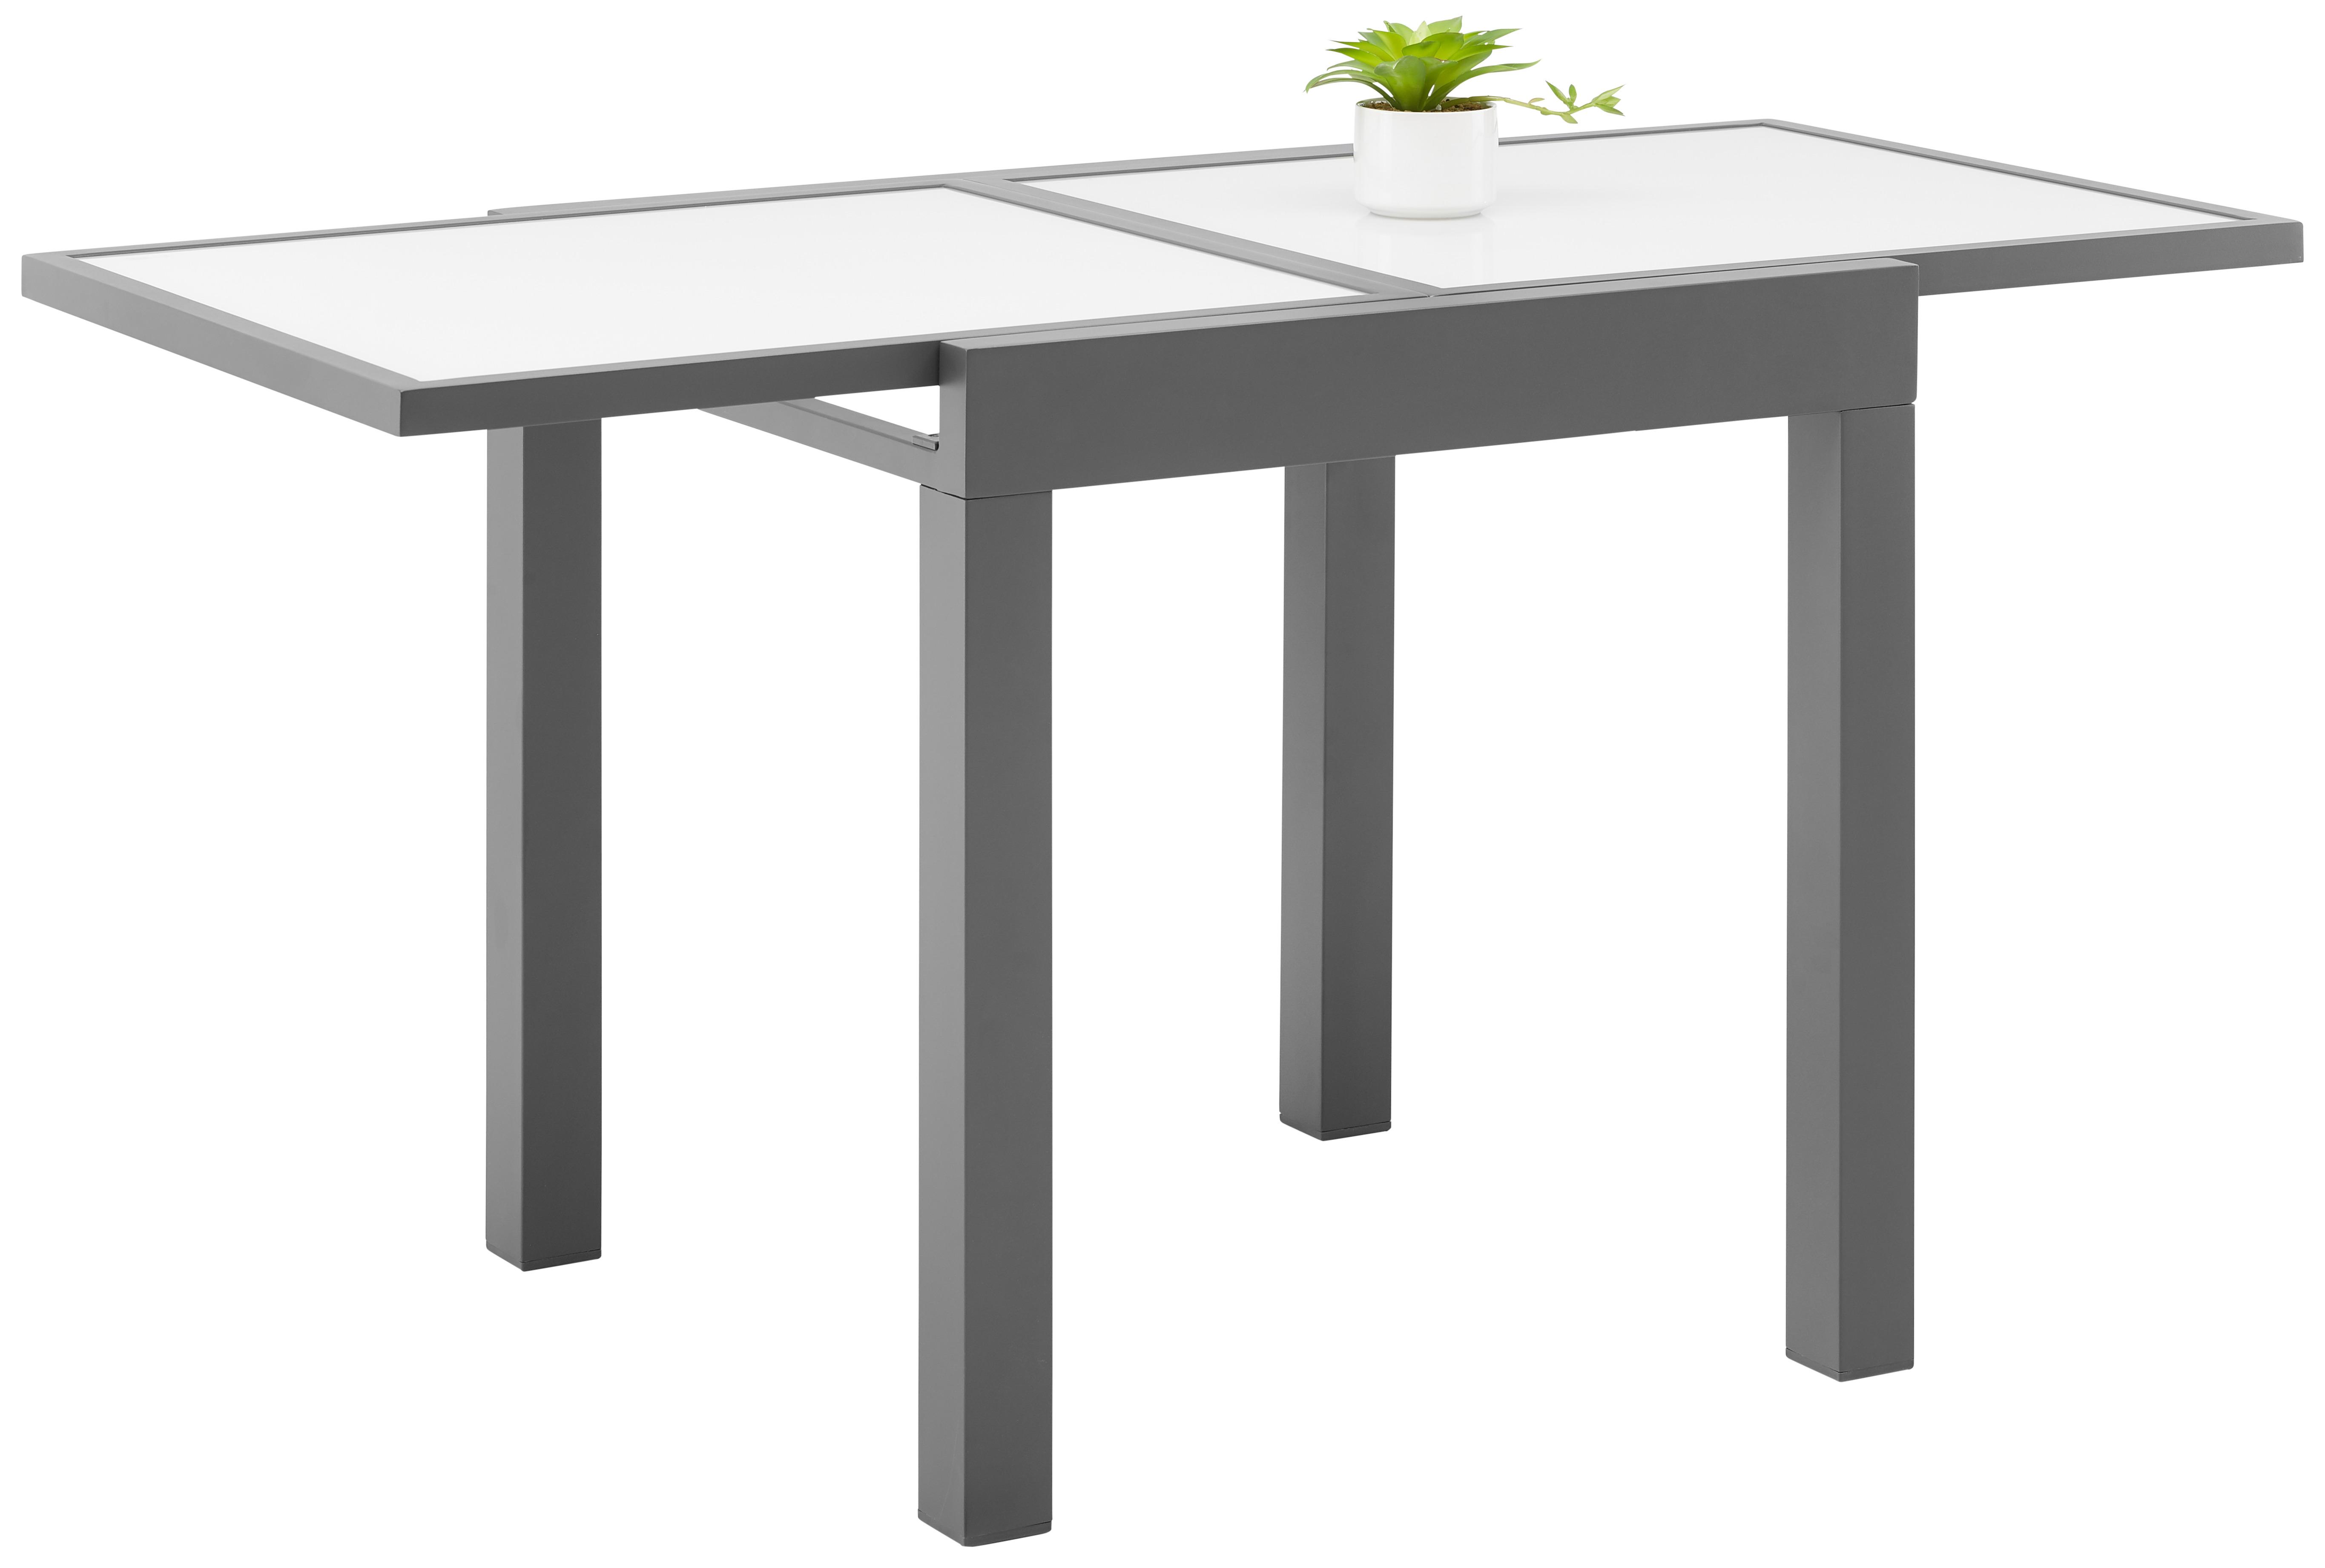 Zahradní Stůl Atlanta 1 - bílá/antracitová, Moderní, kov/sklo (70-140/75/70cm) - Modern Living